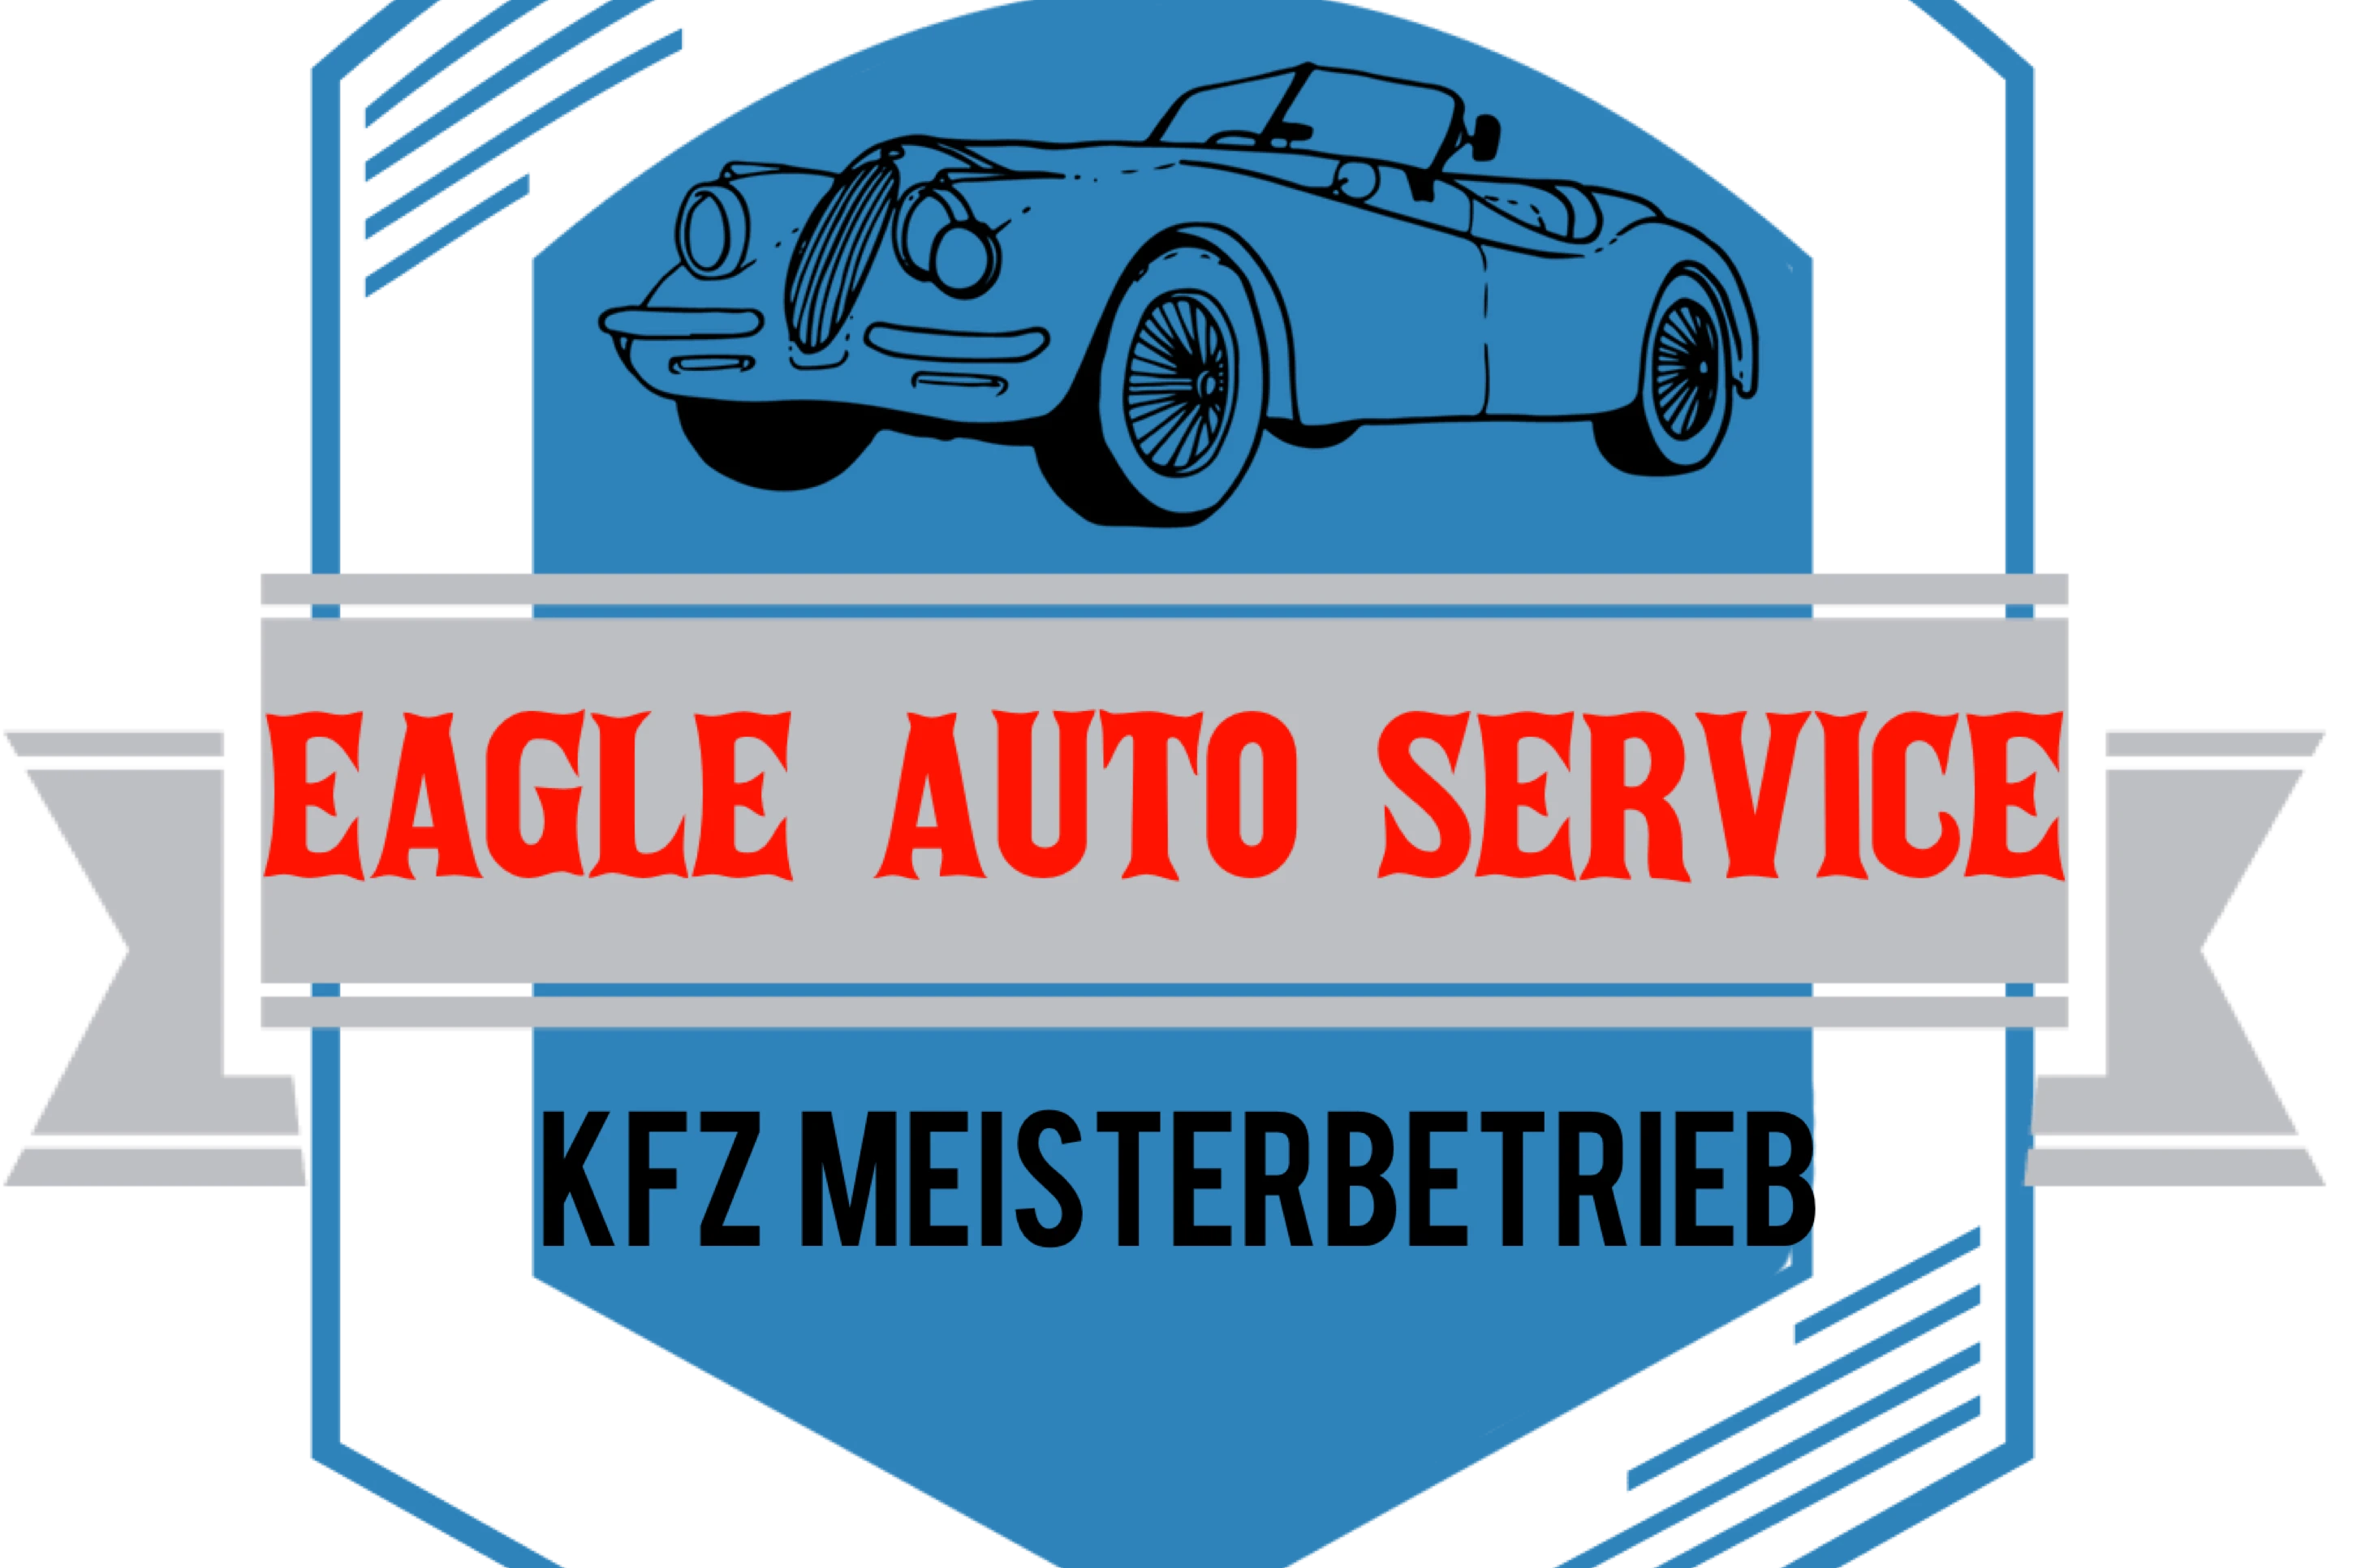 Eagle Auto Service